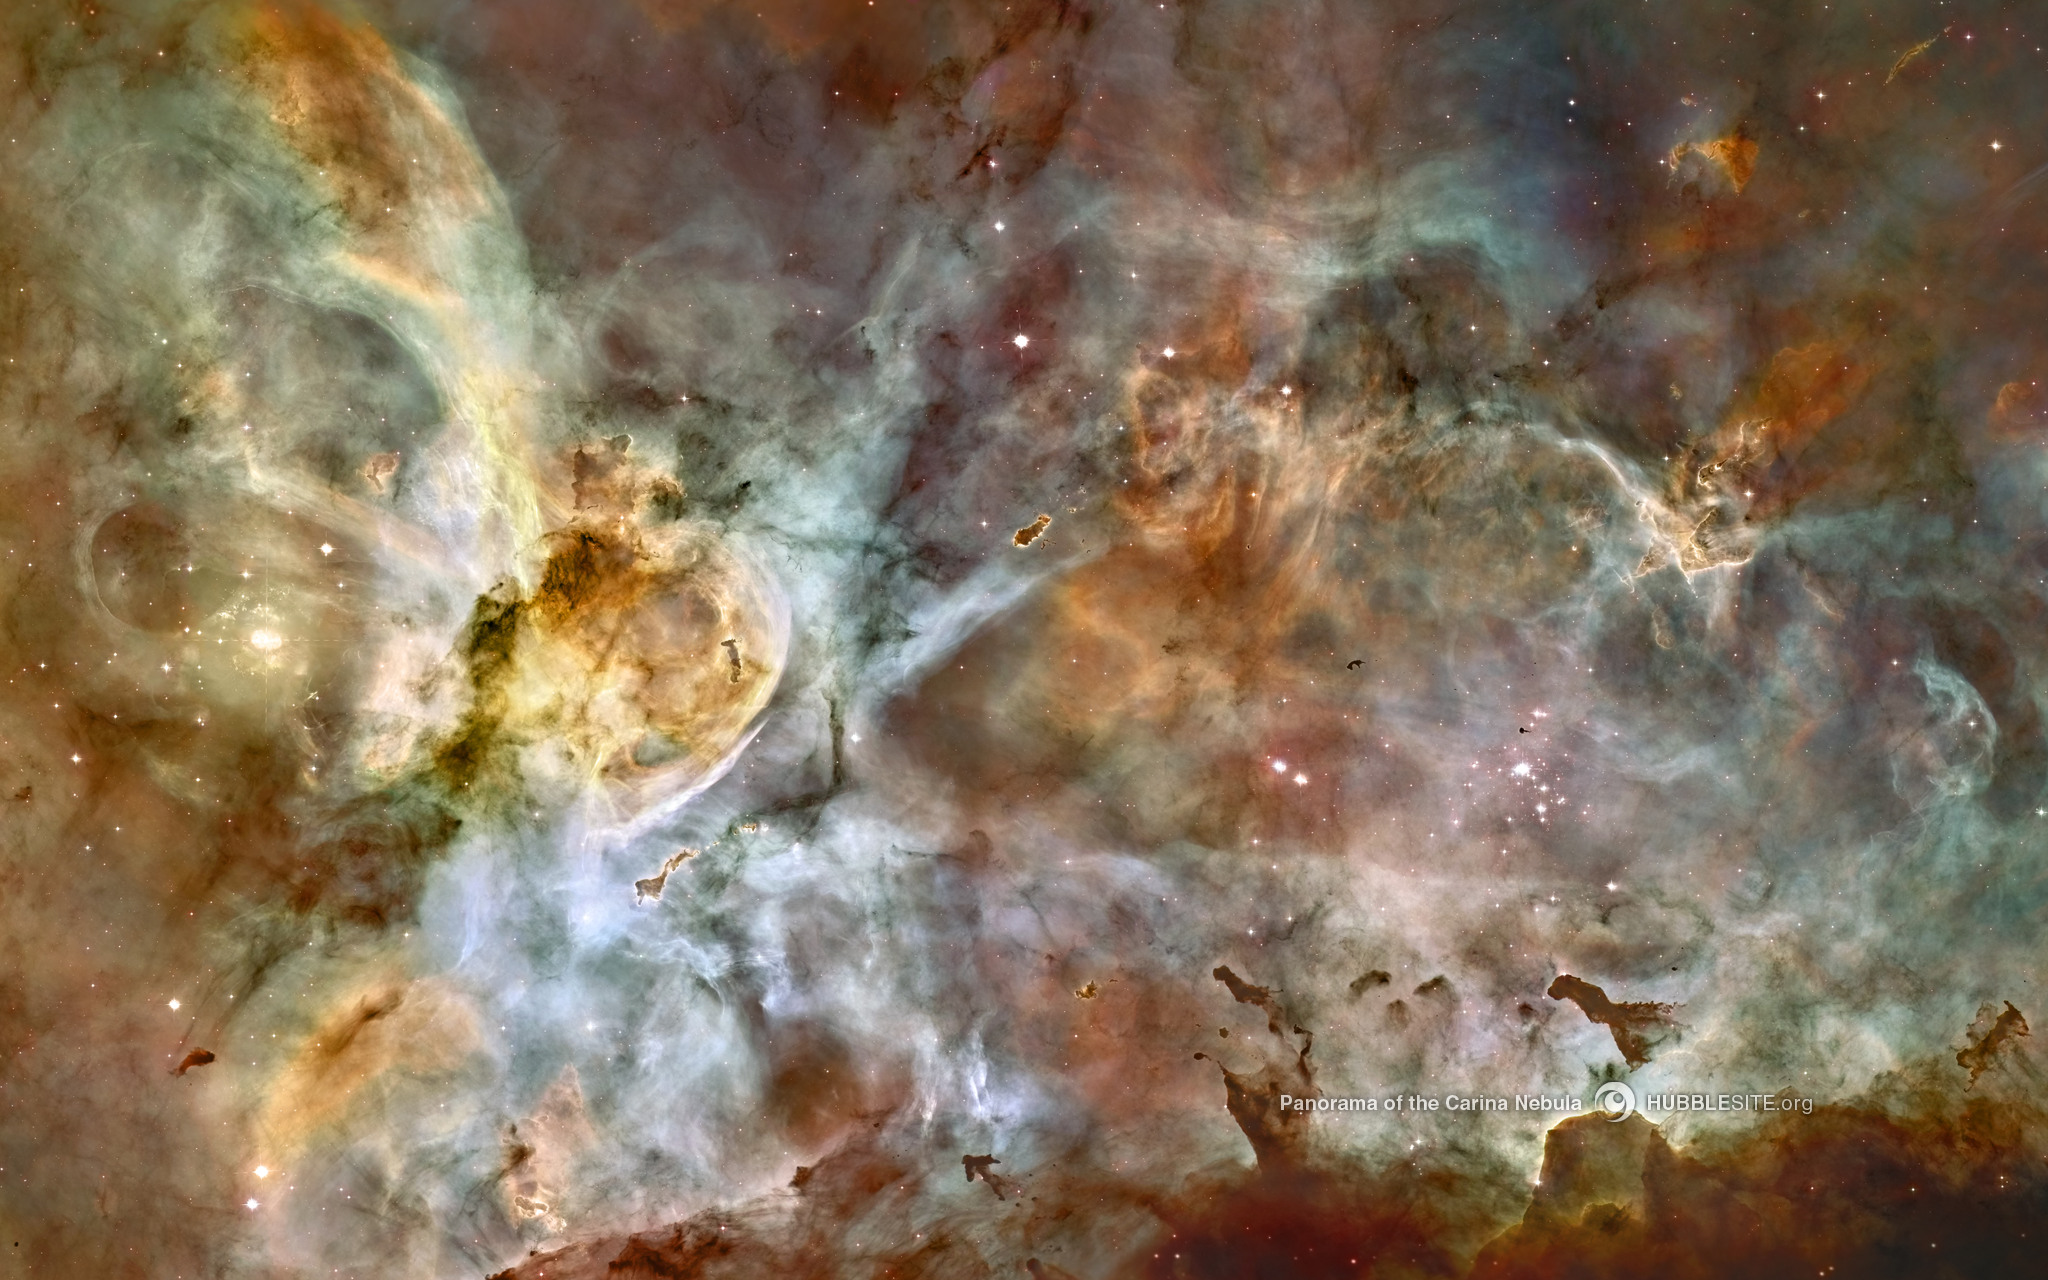 Panorama of the Carina Nebula